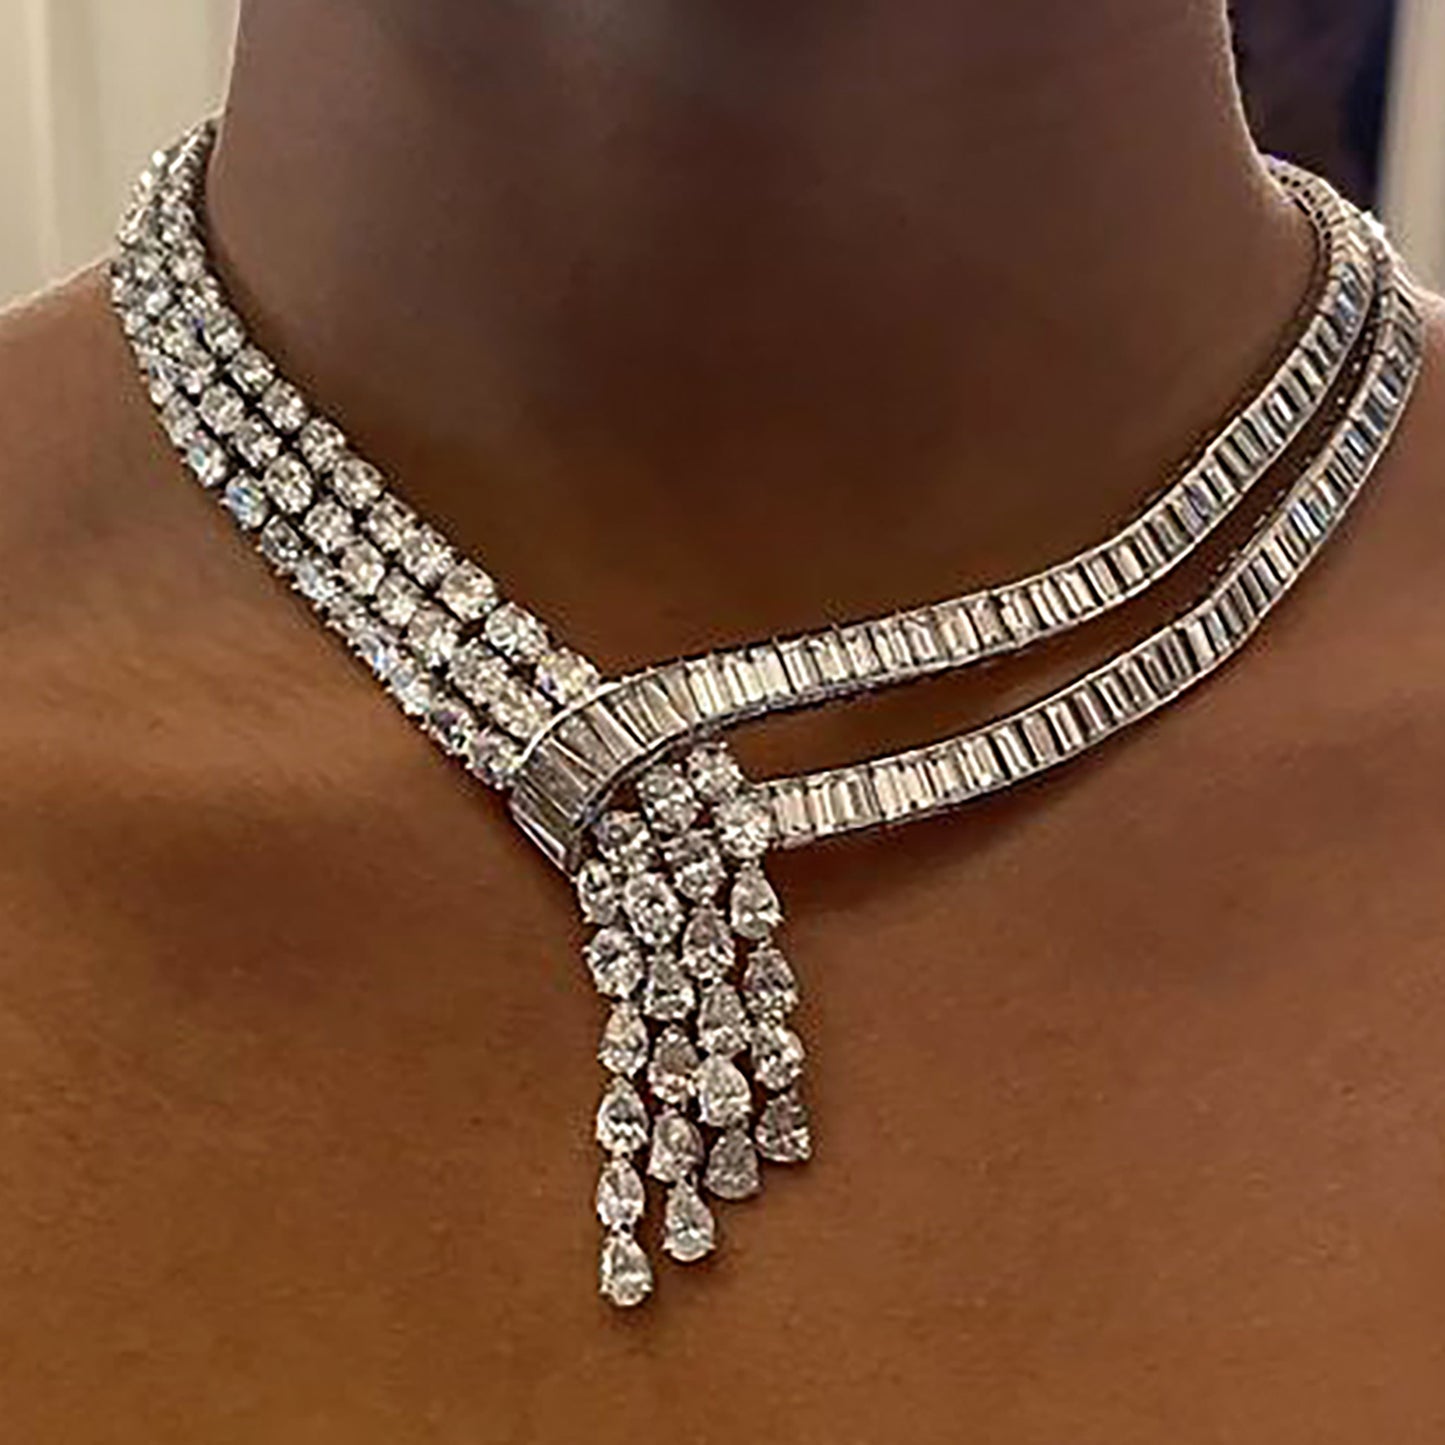 1970s Platinum Diamond Necklace worn on neck